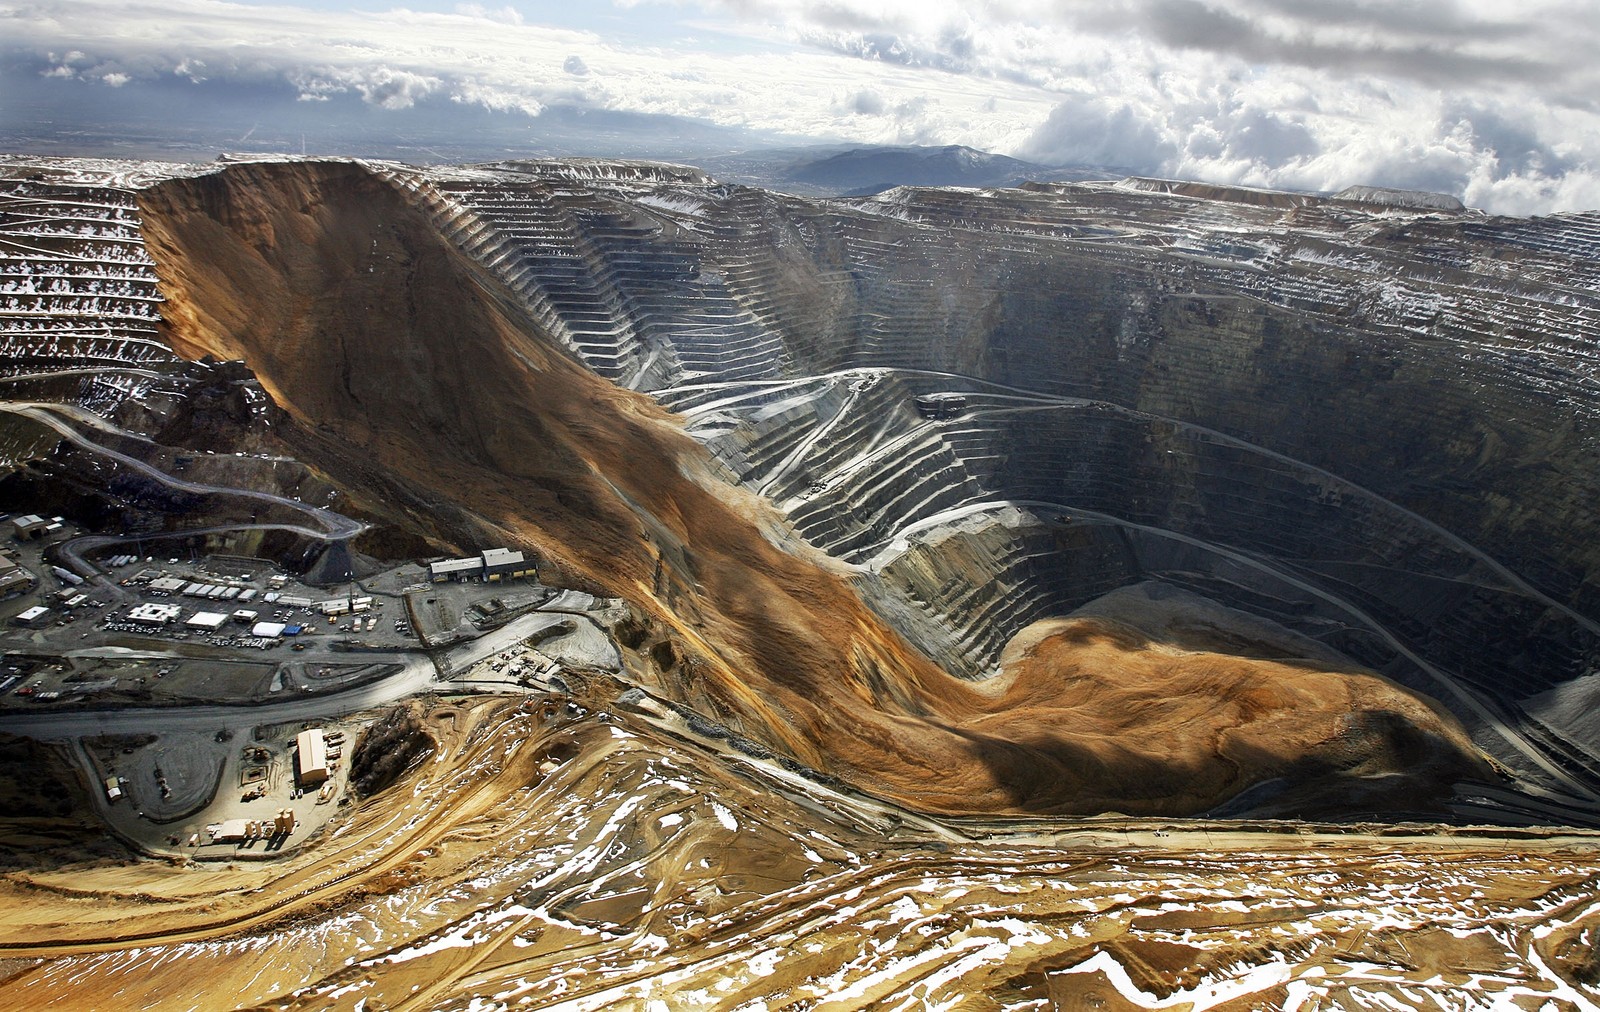 Largest North American landslide on record, Bingham Canyon Mine, Utah, 2013